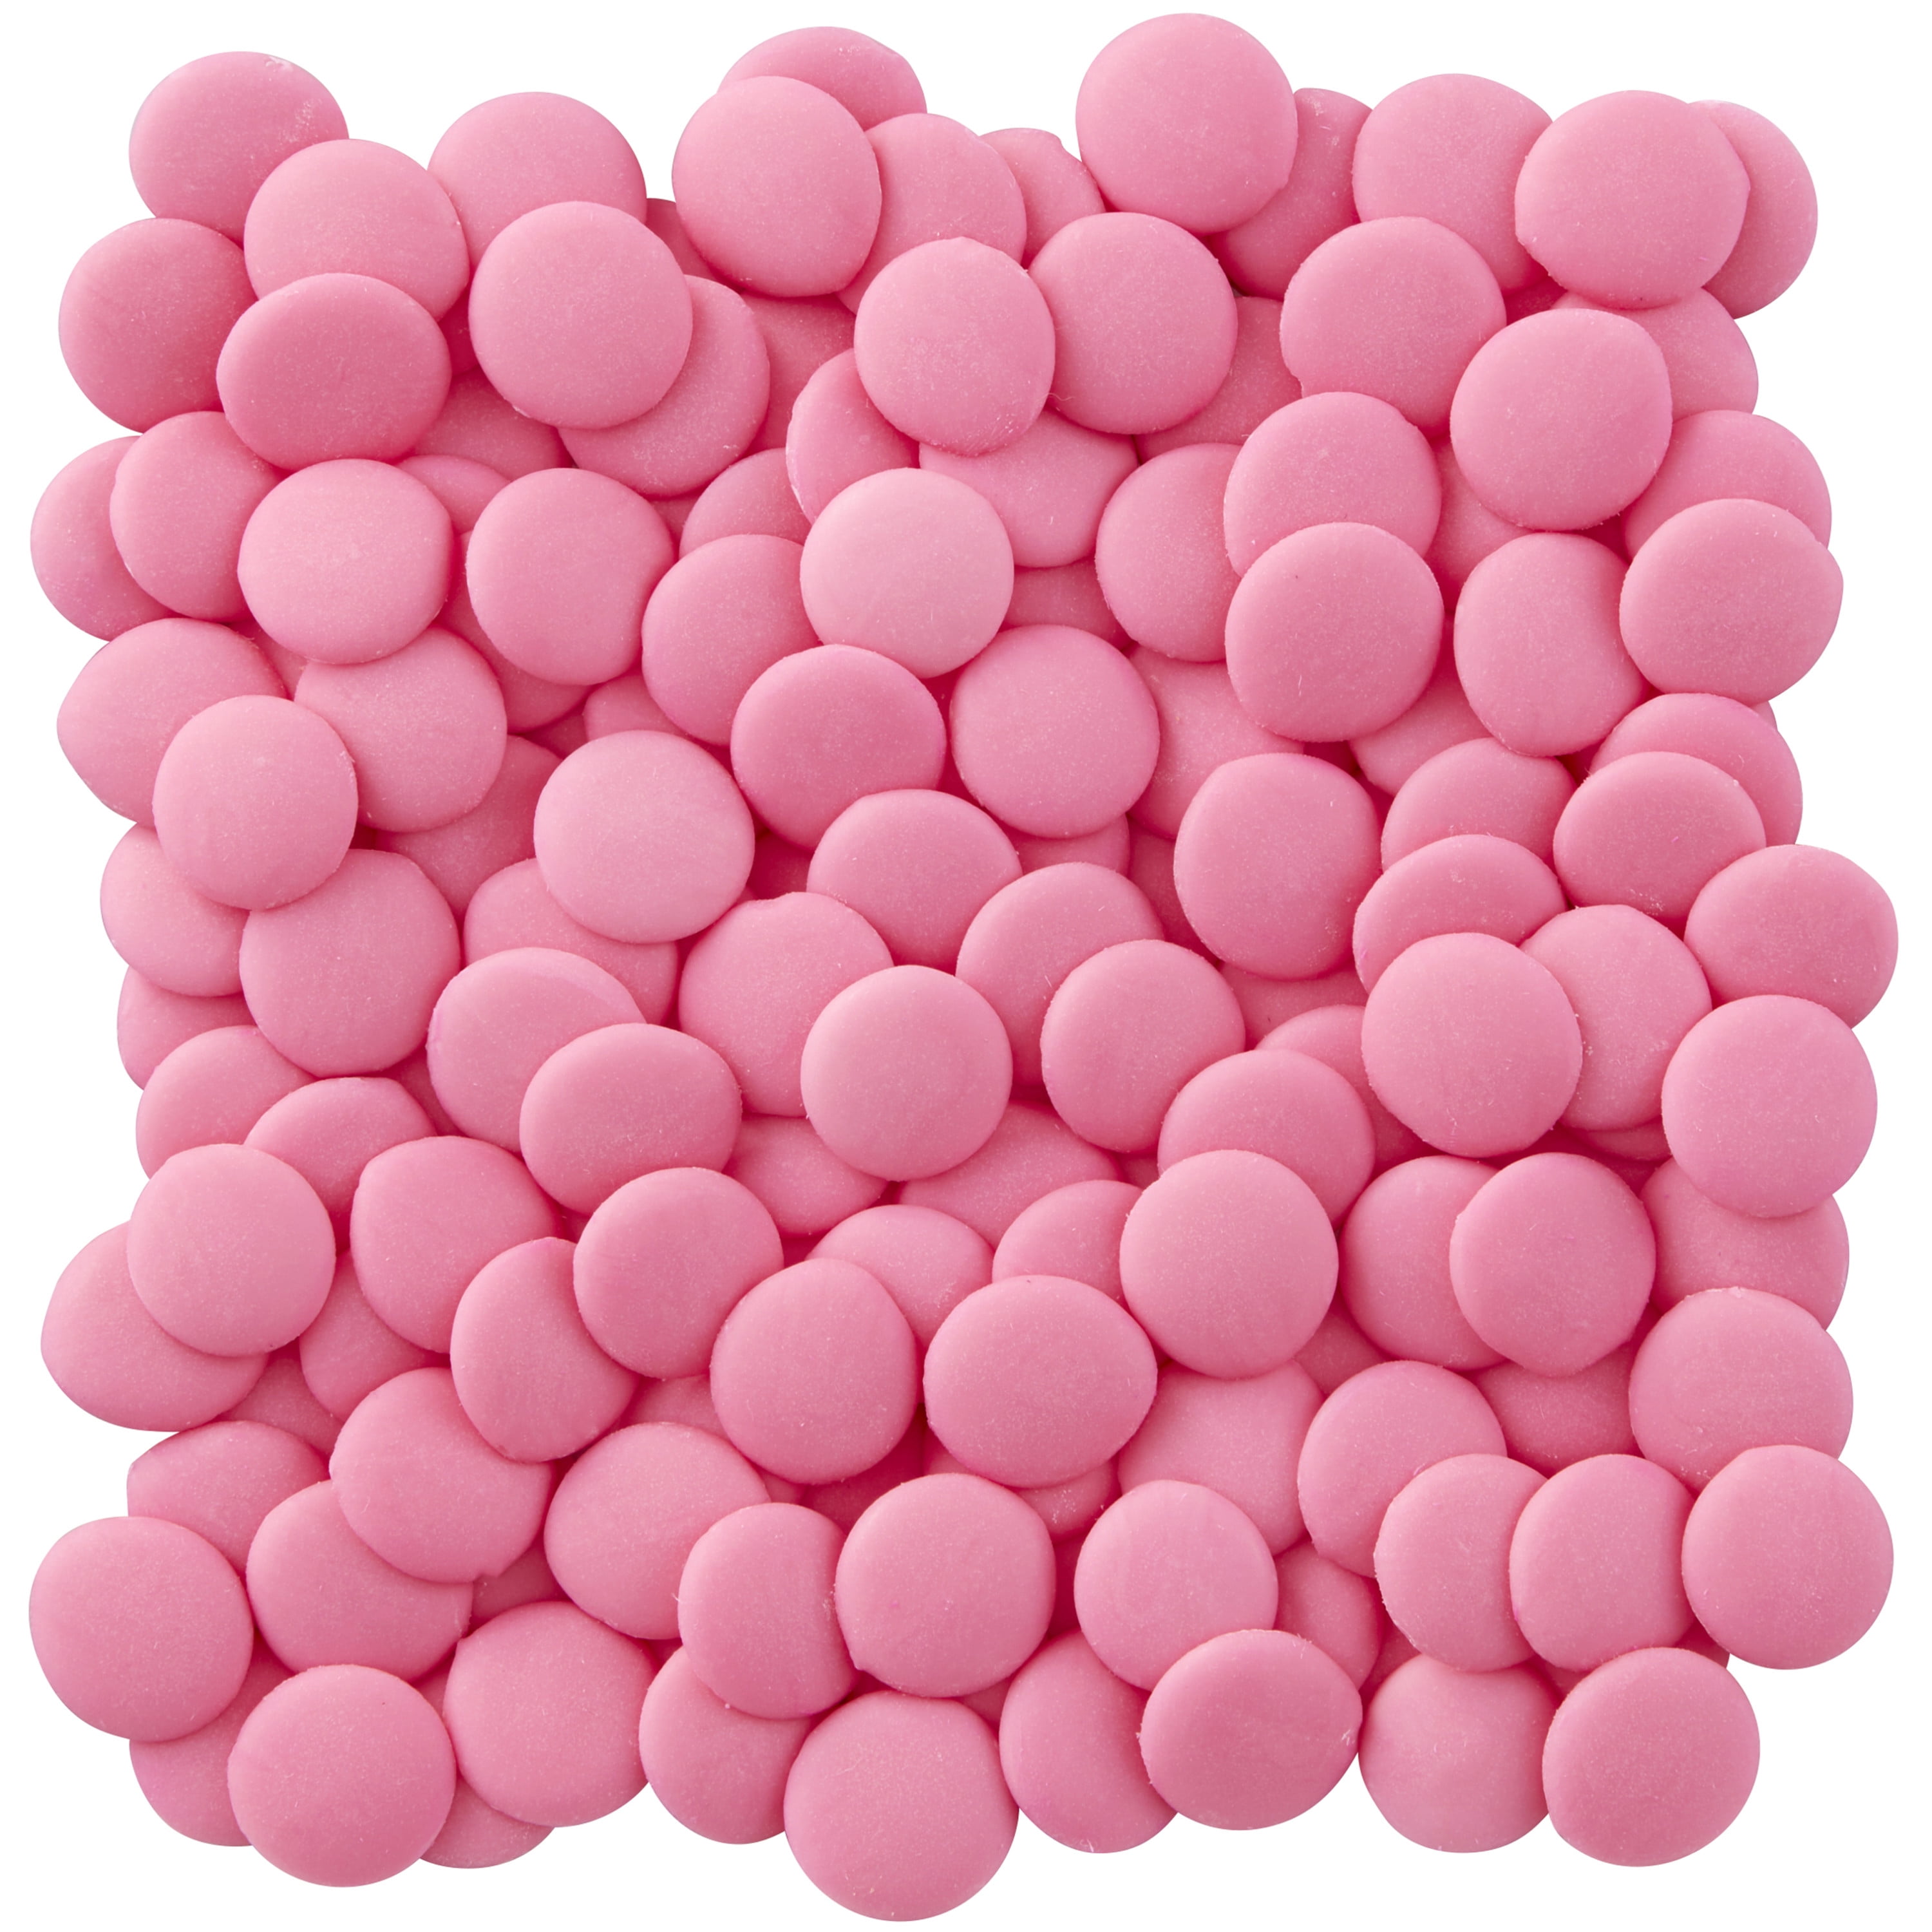 Clasen Alpine Blush Pink Chocolate Melts - 12oz